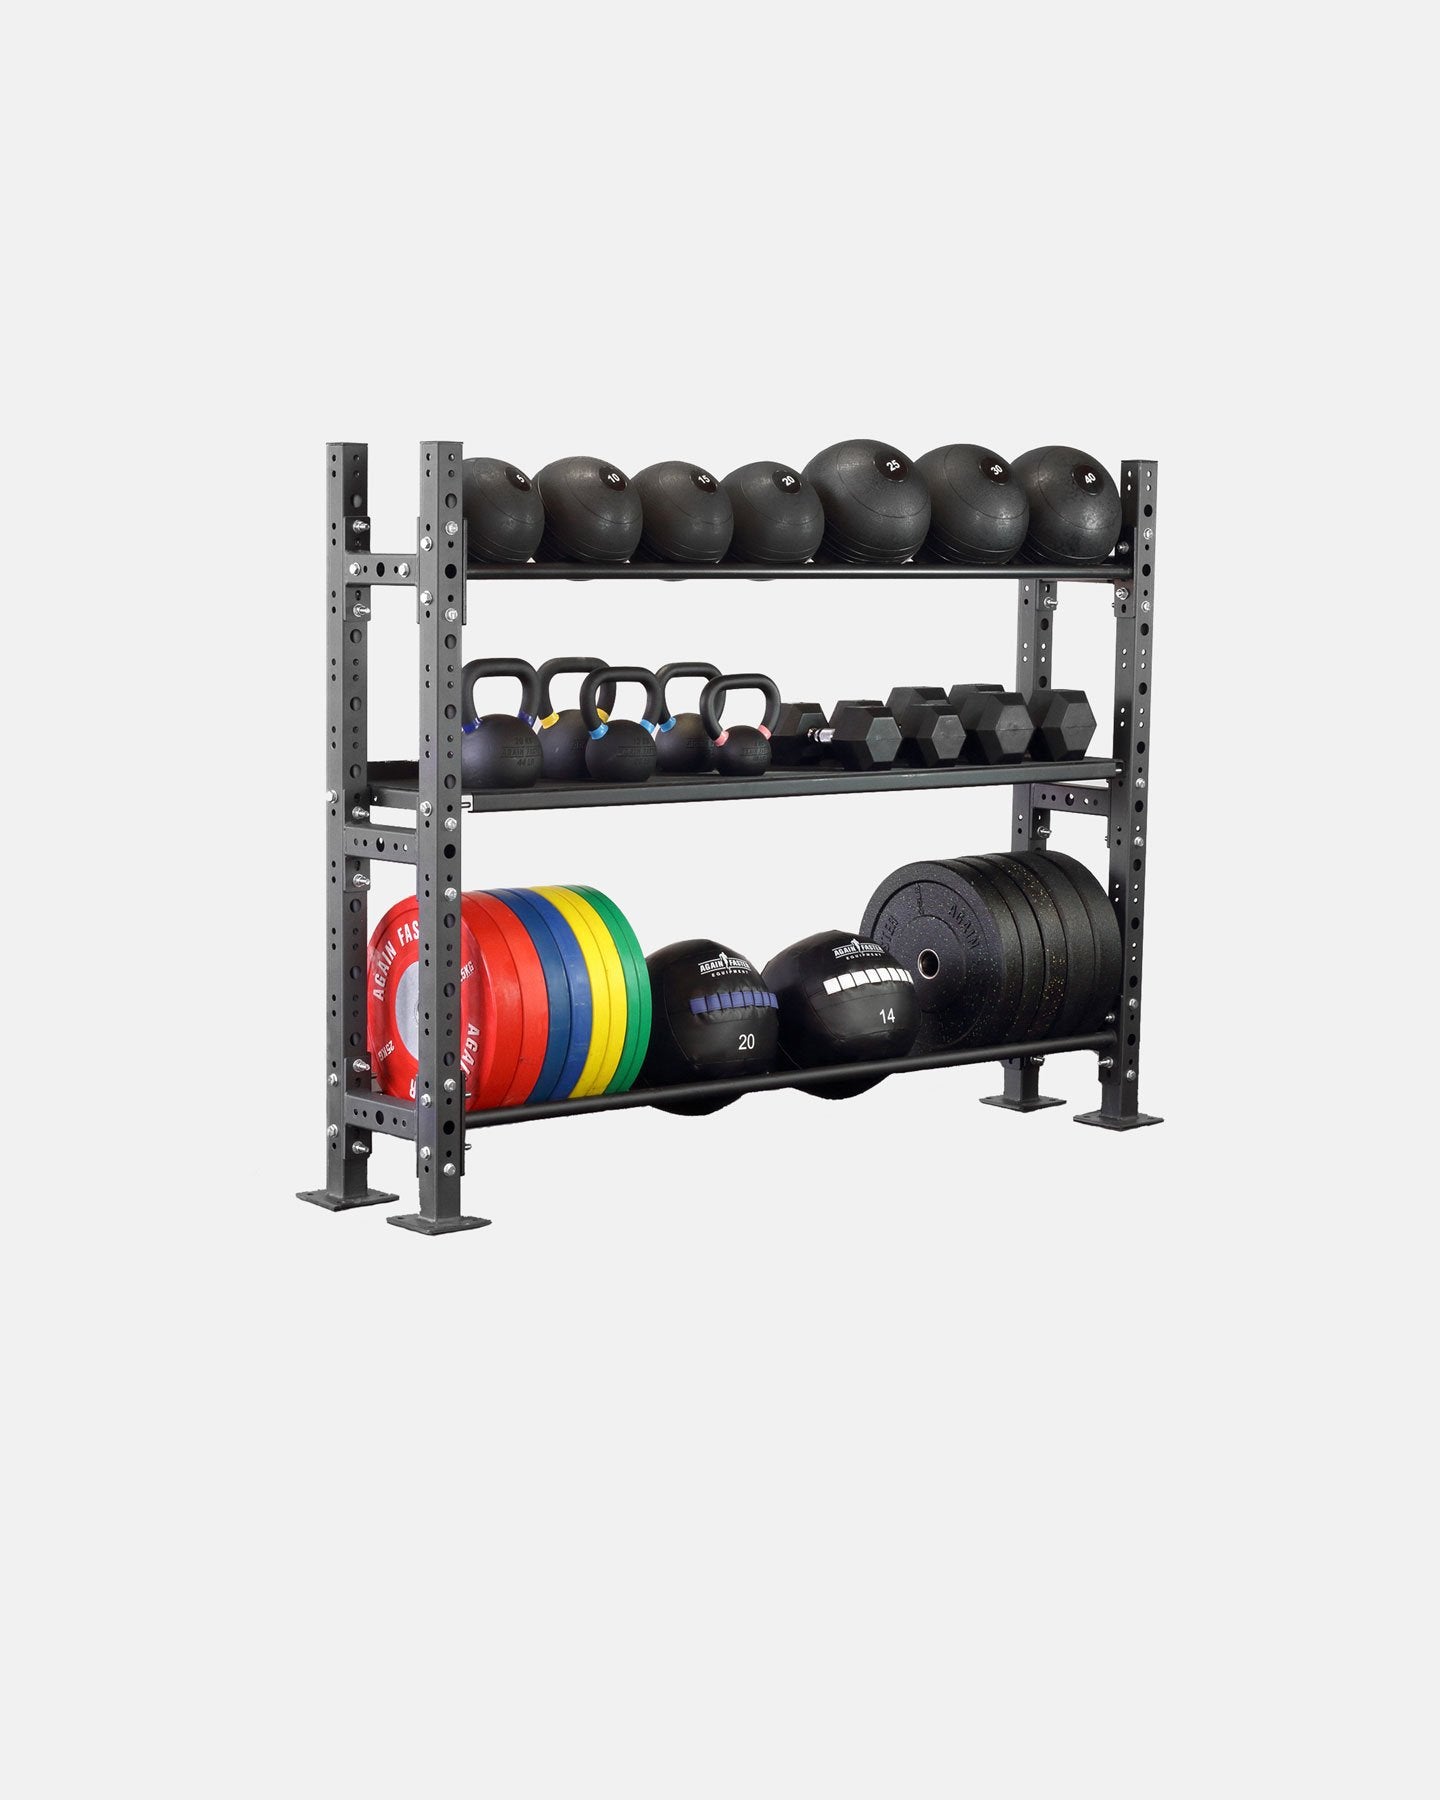 mass storage unity for home commercial gym medball slam ball bumper plates